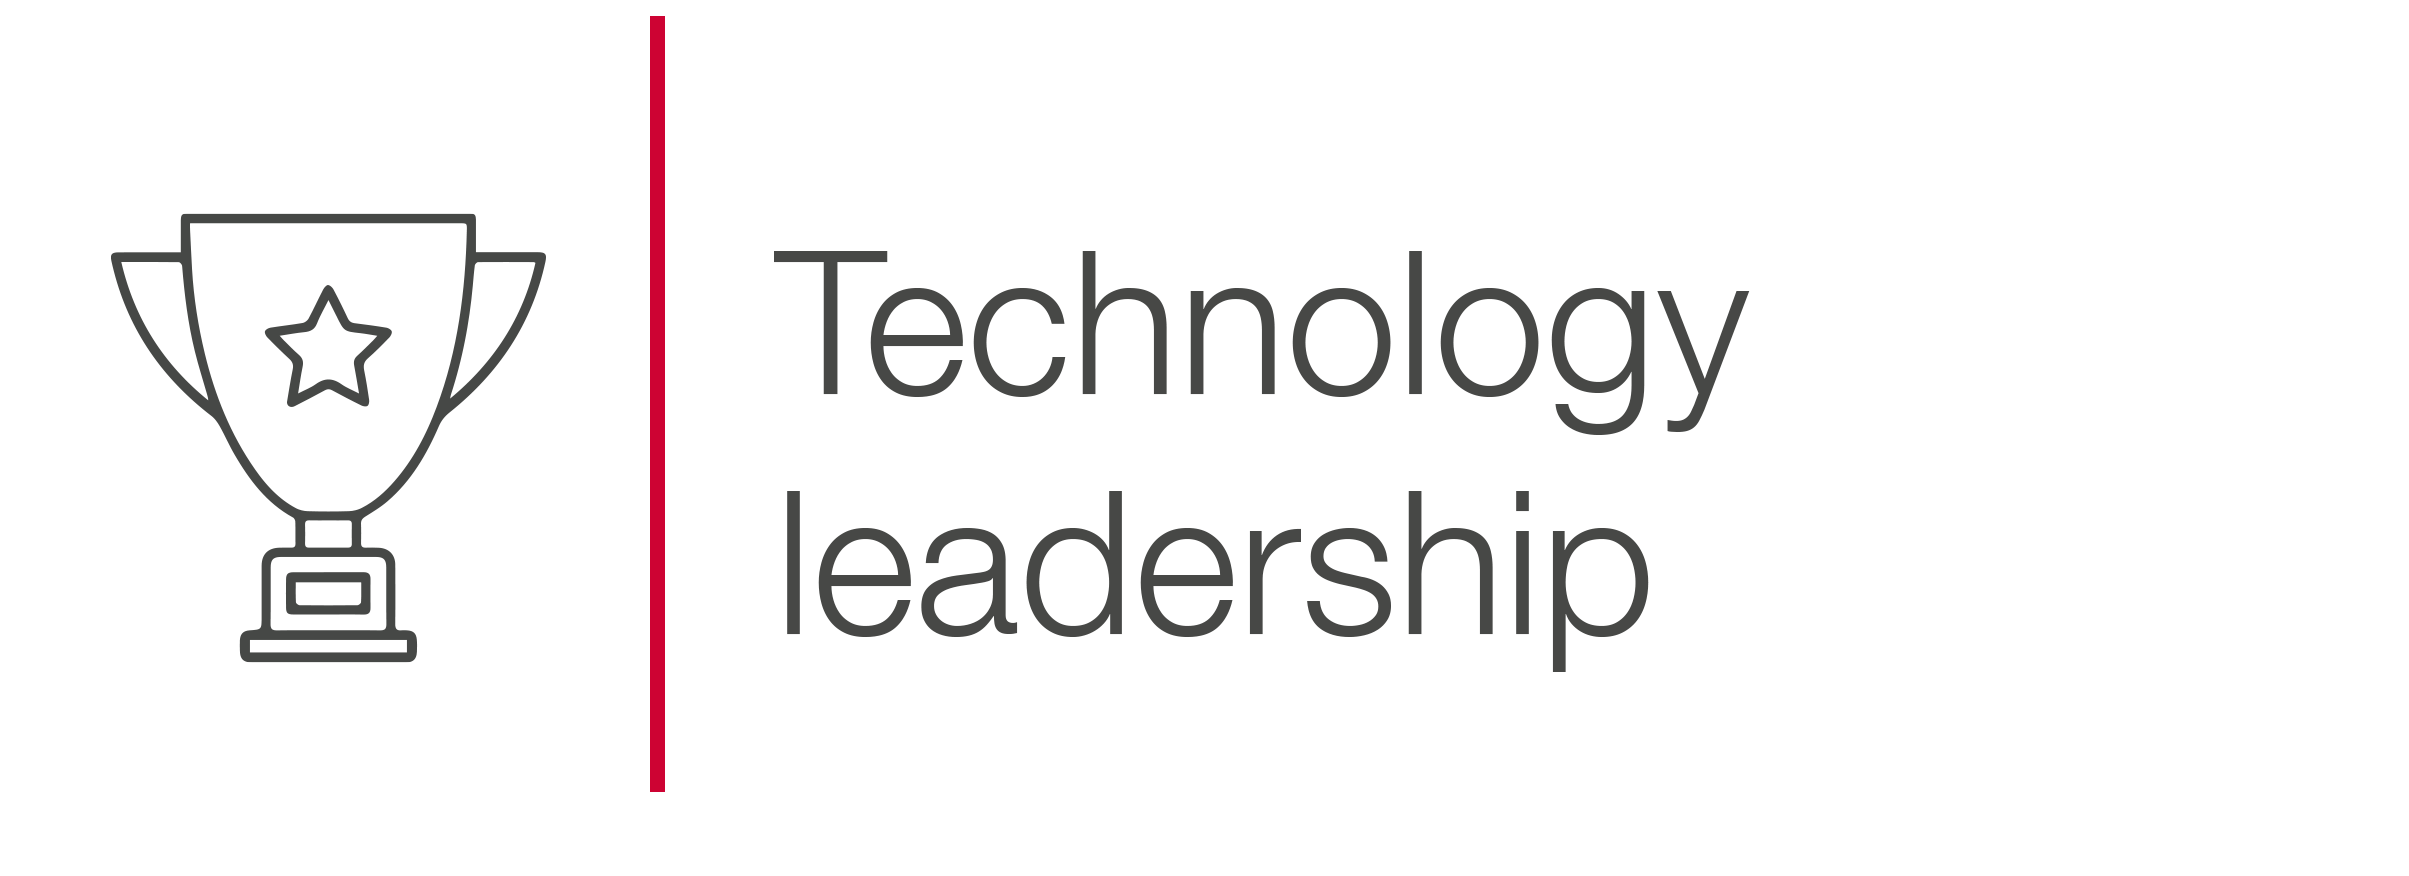 Technology leadership